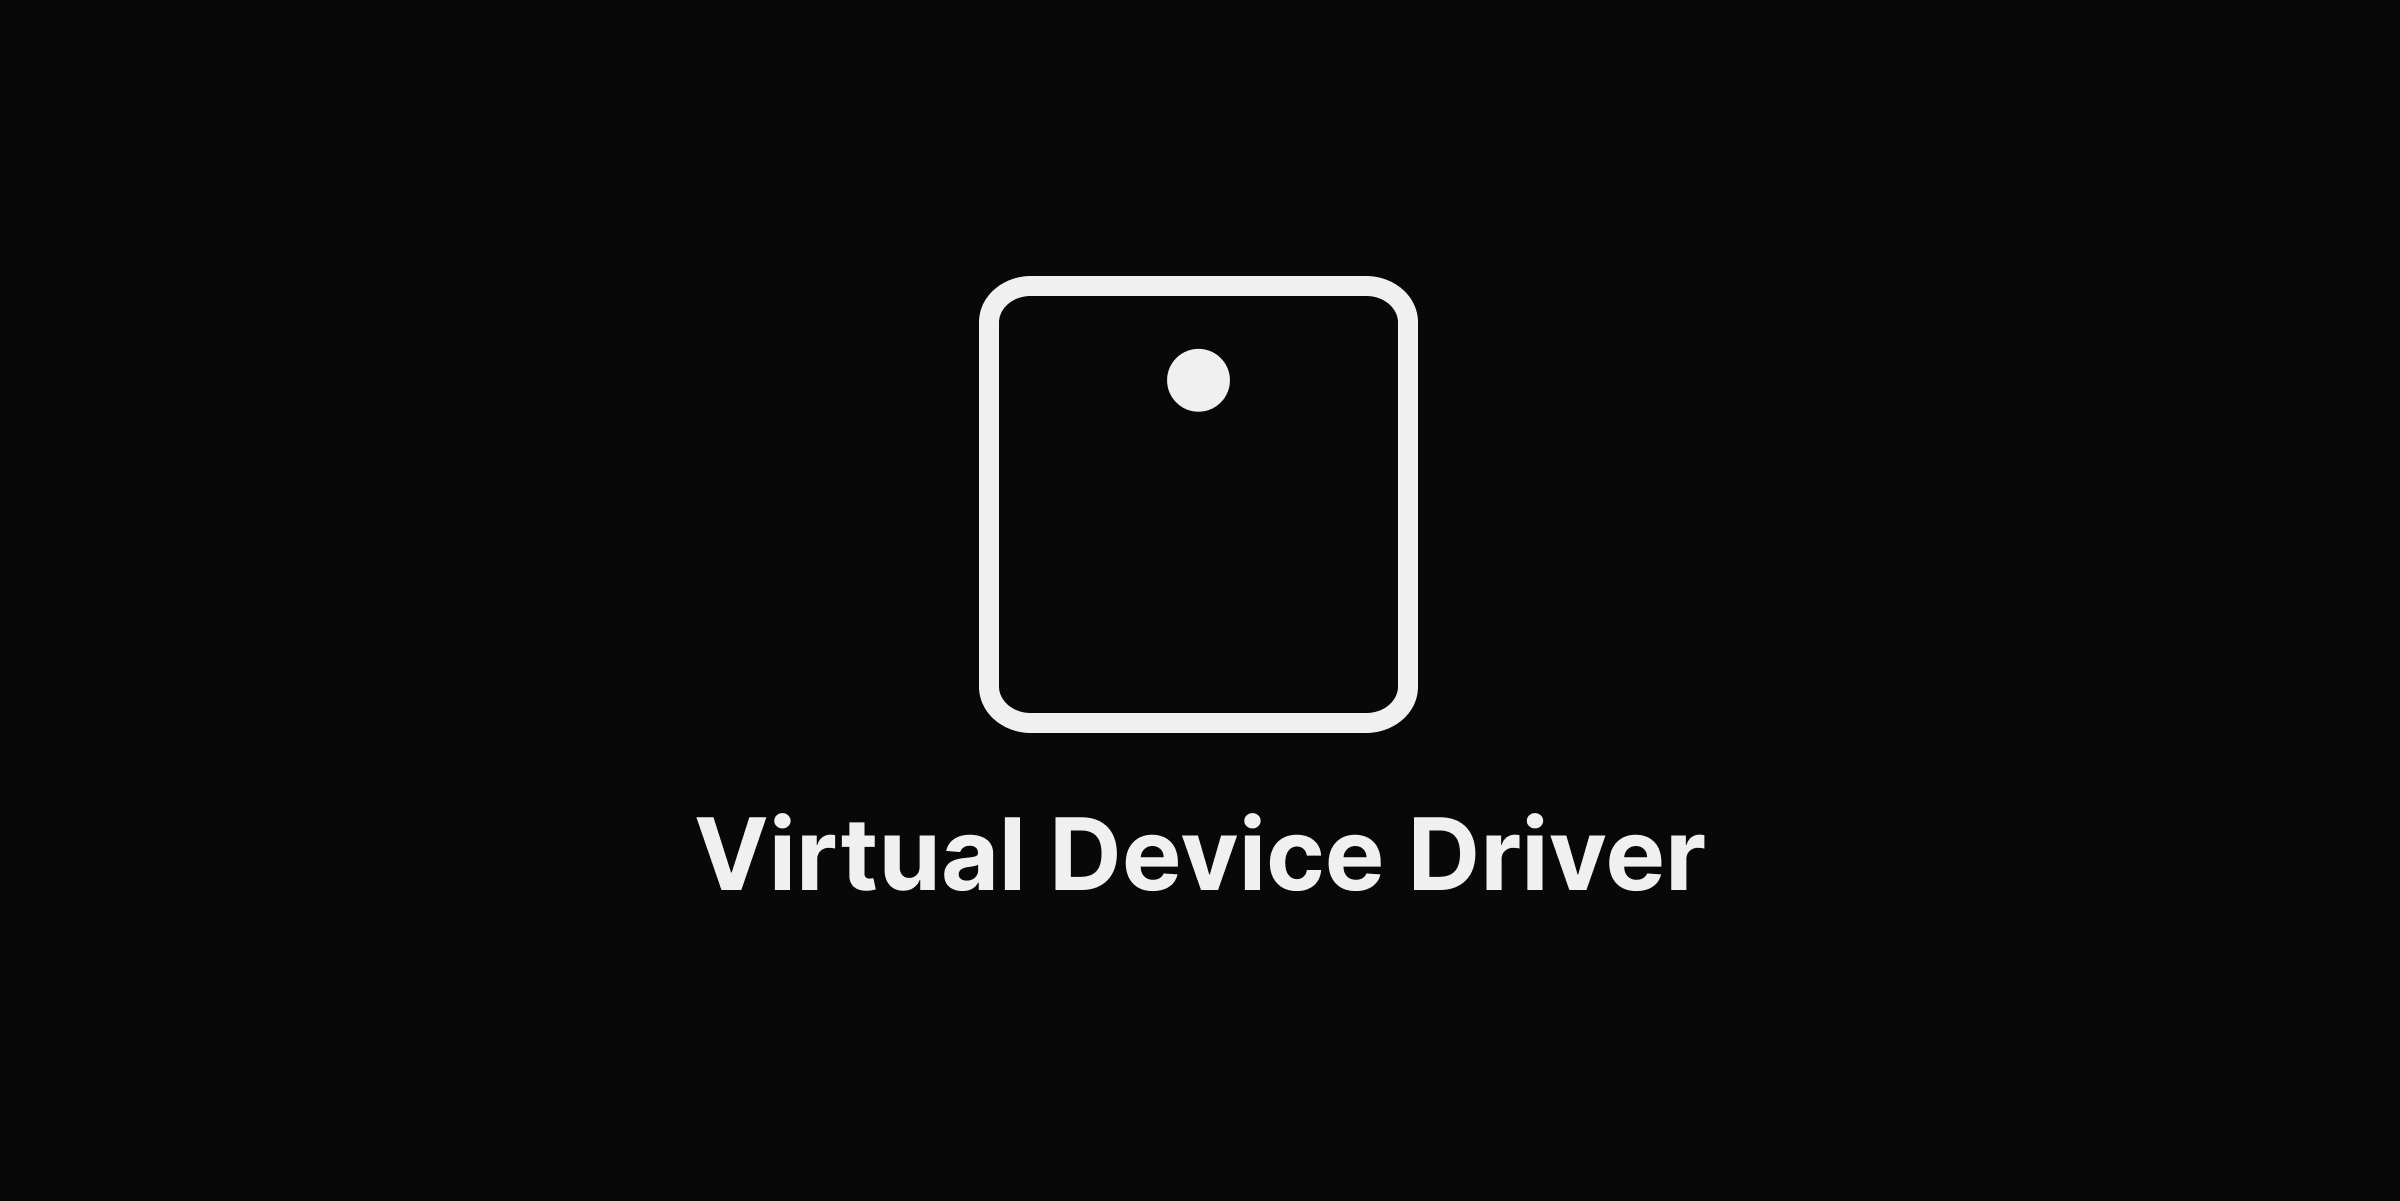 Virtual device driver